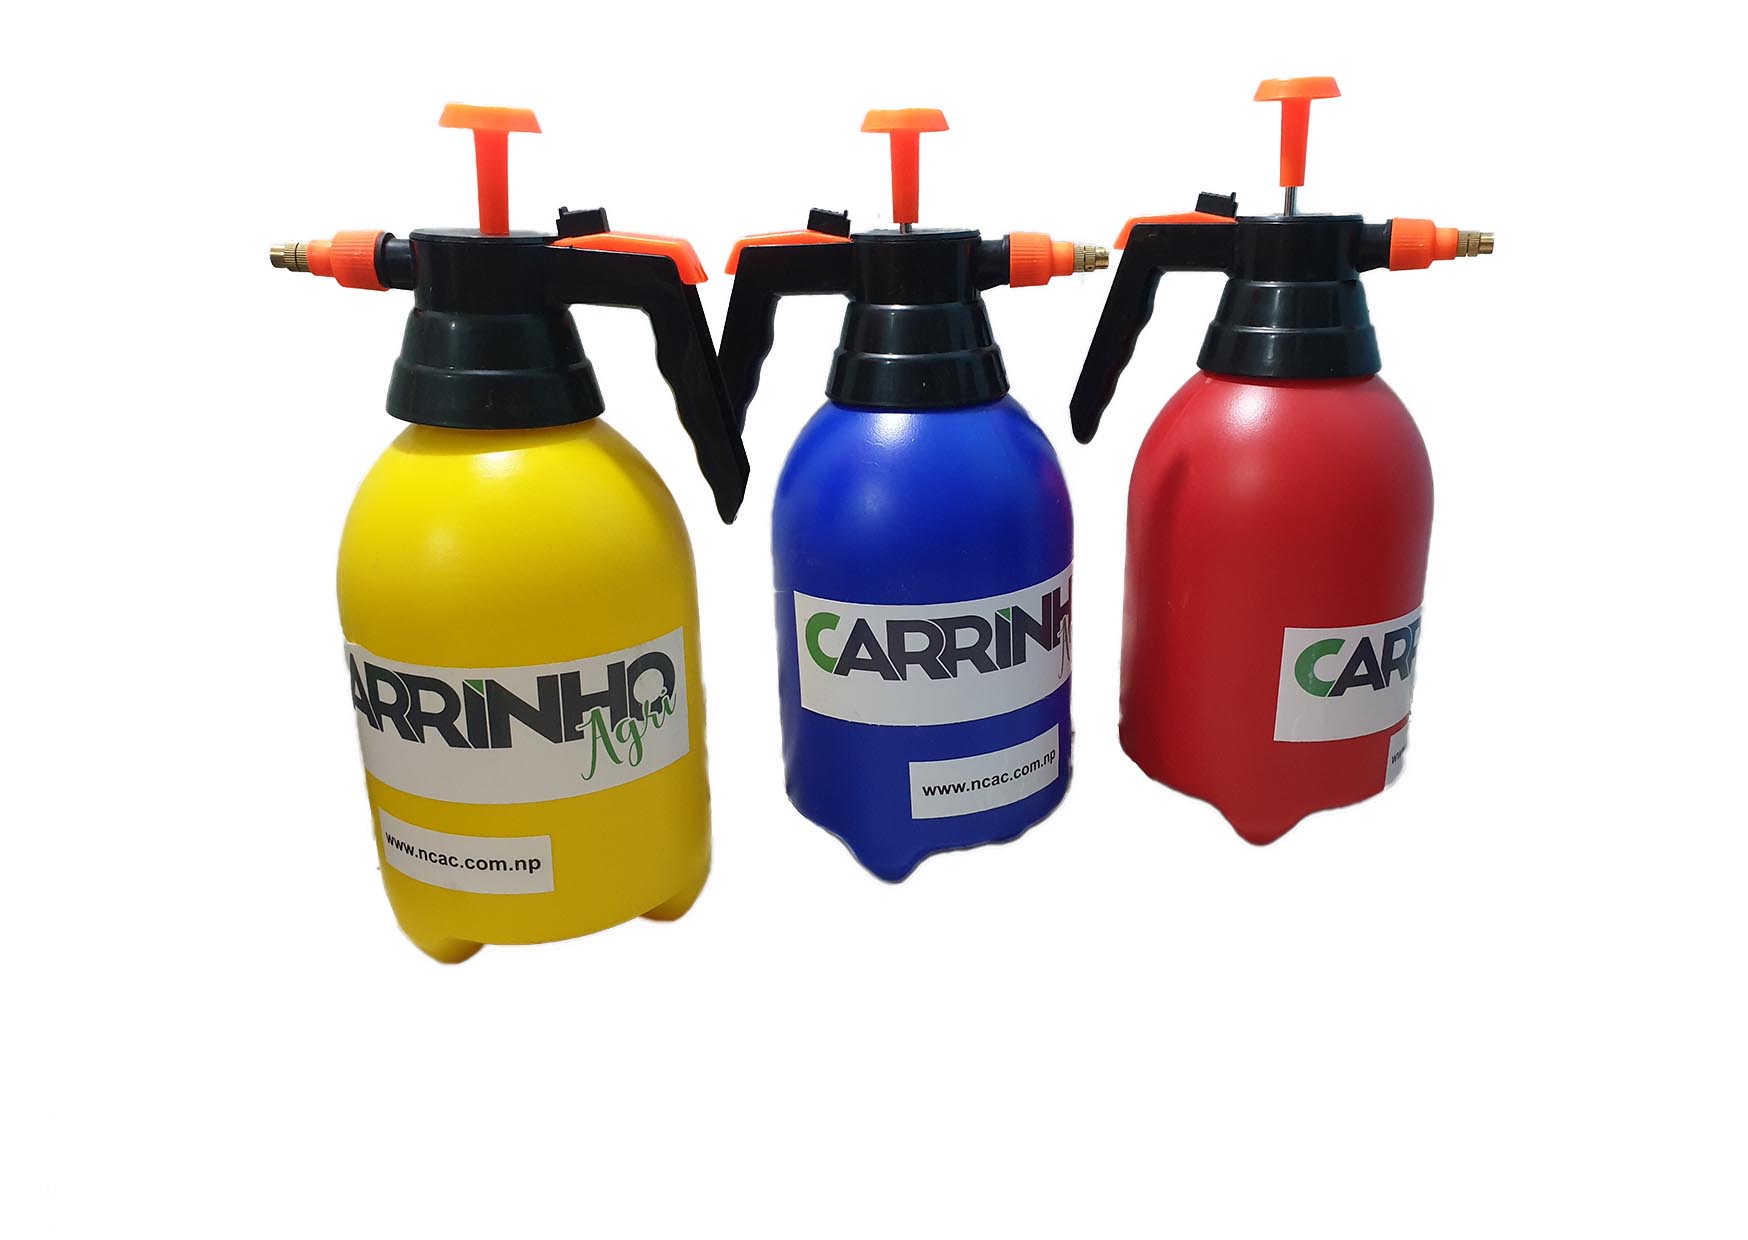 CARRINHO Agri Hand Sprayer 2 Liter